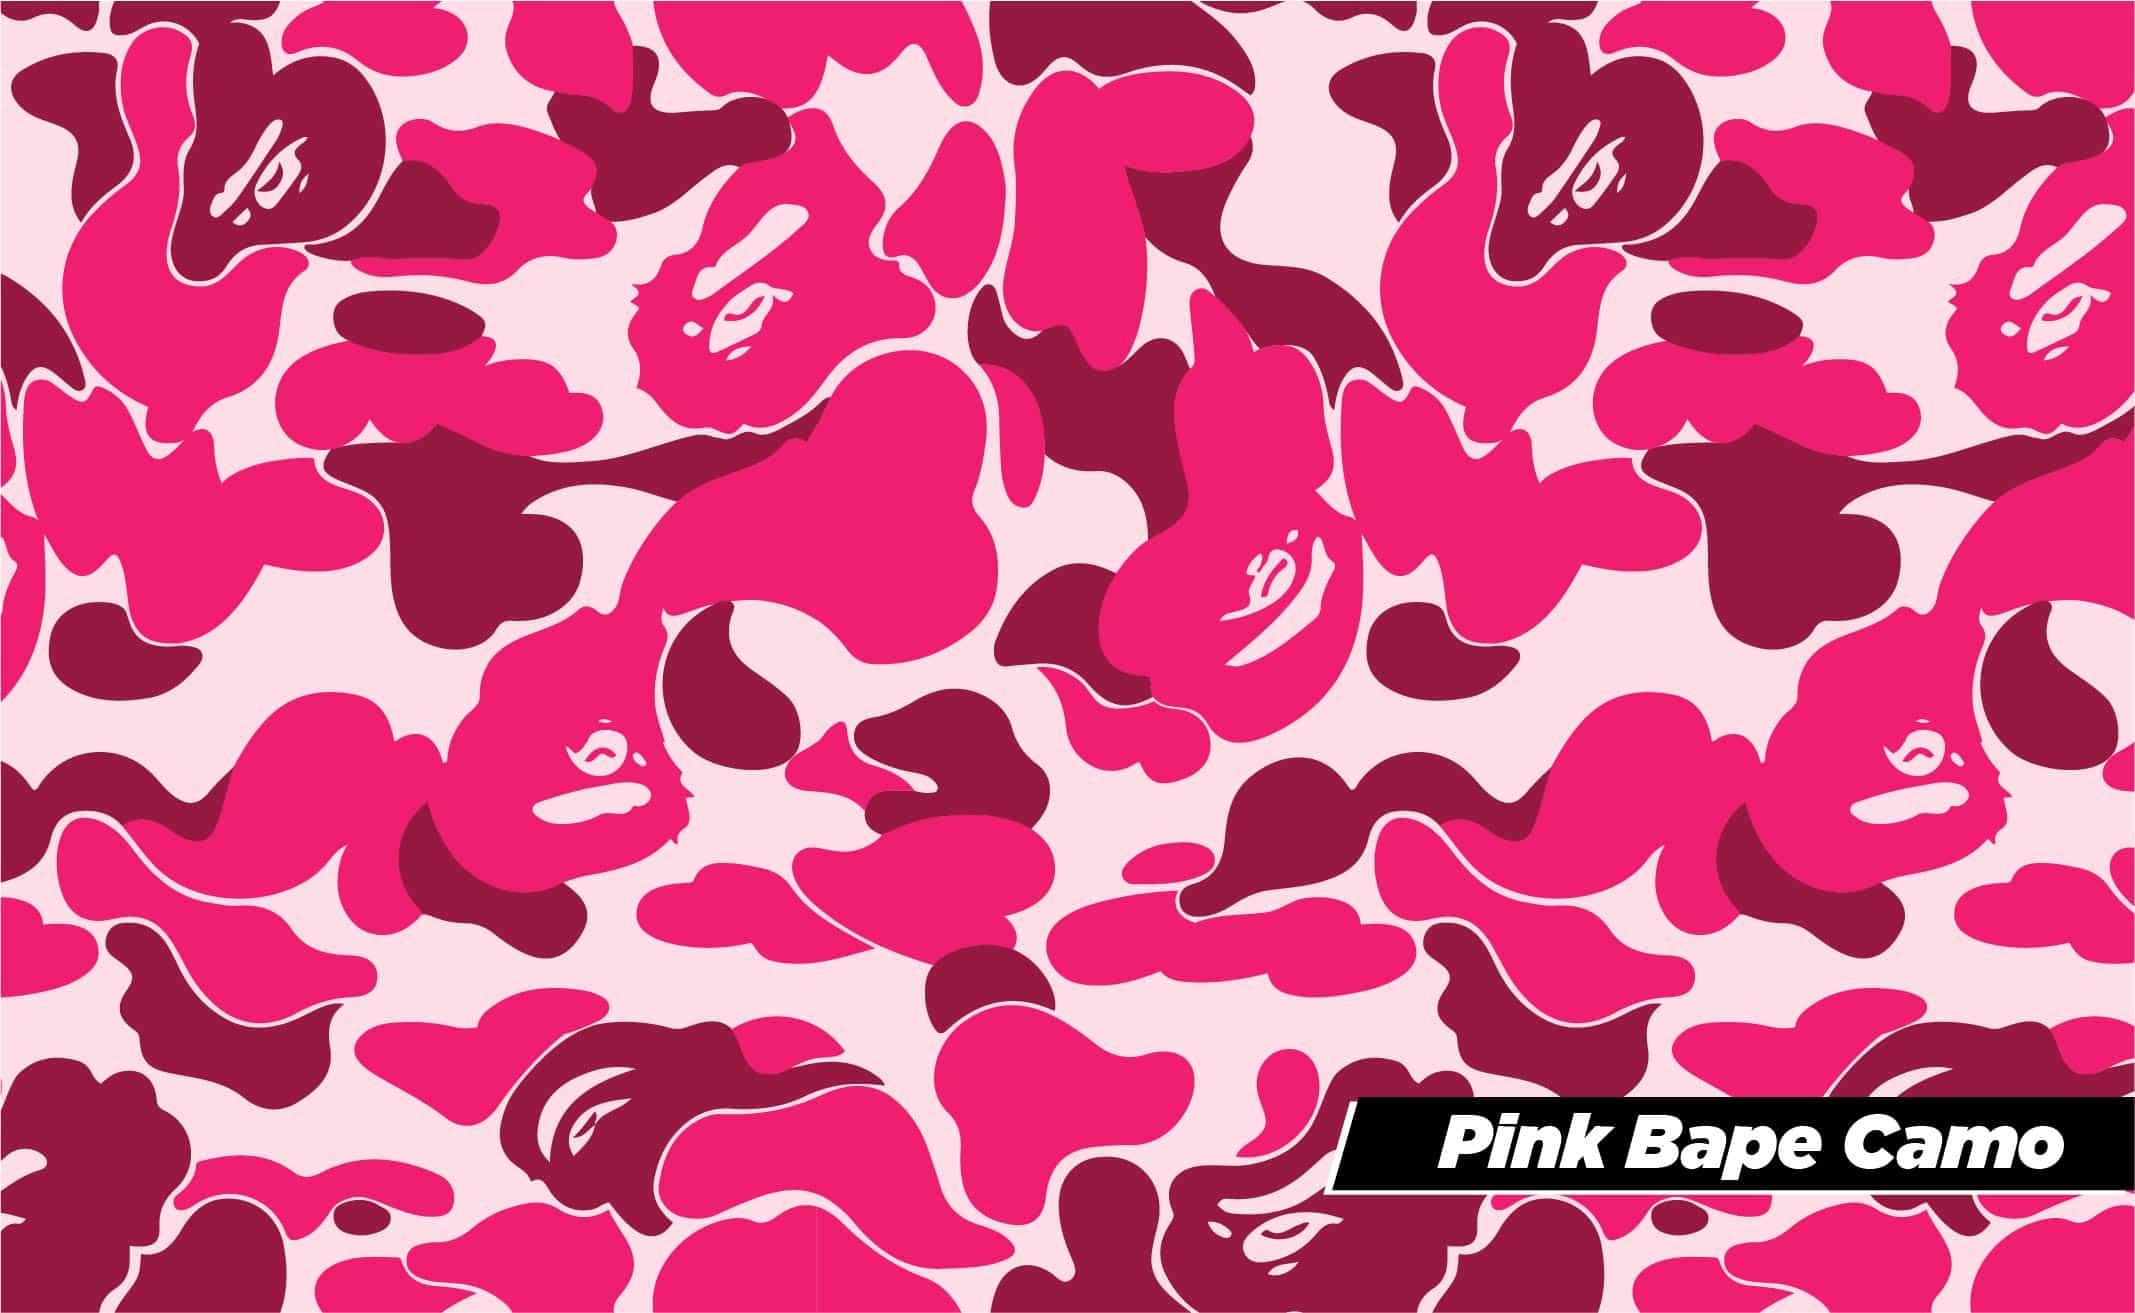 Bape Pink Camo